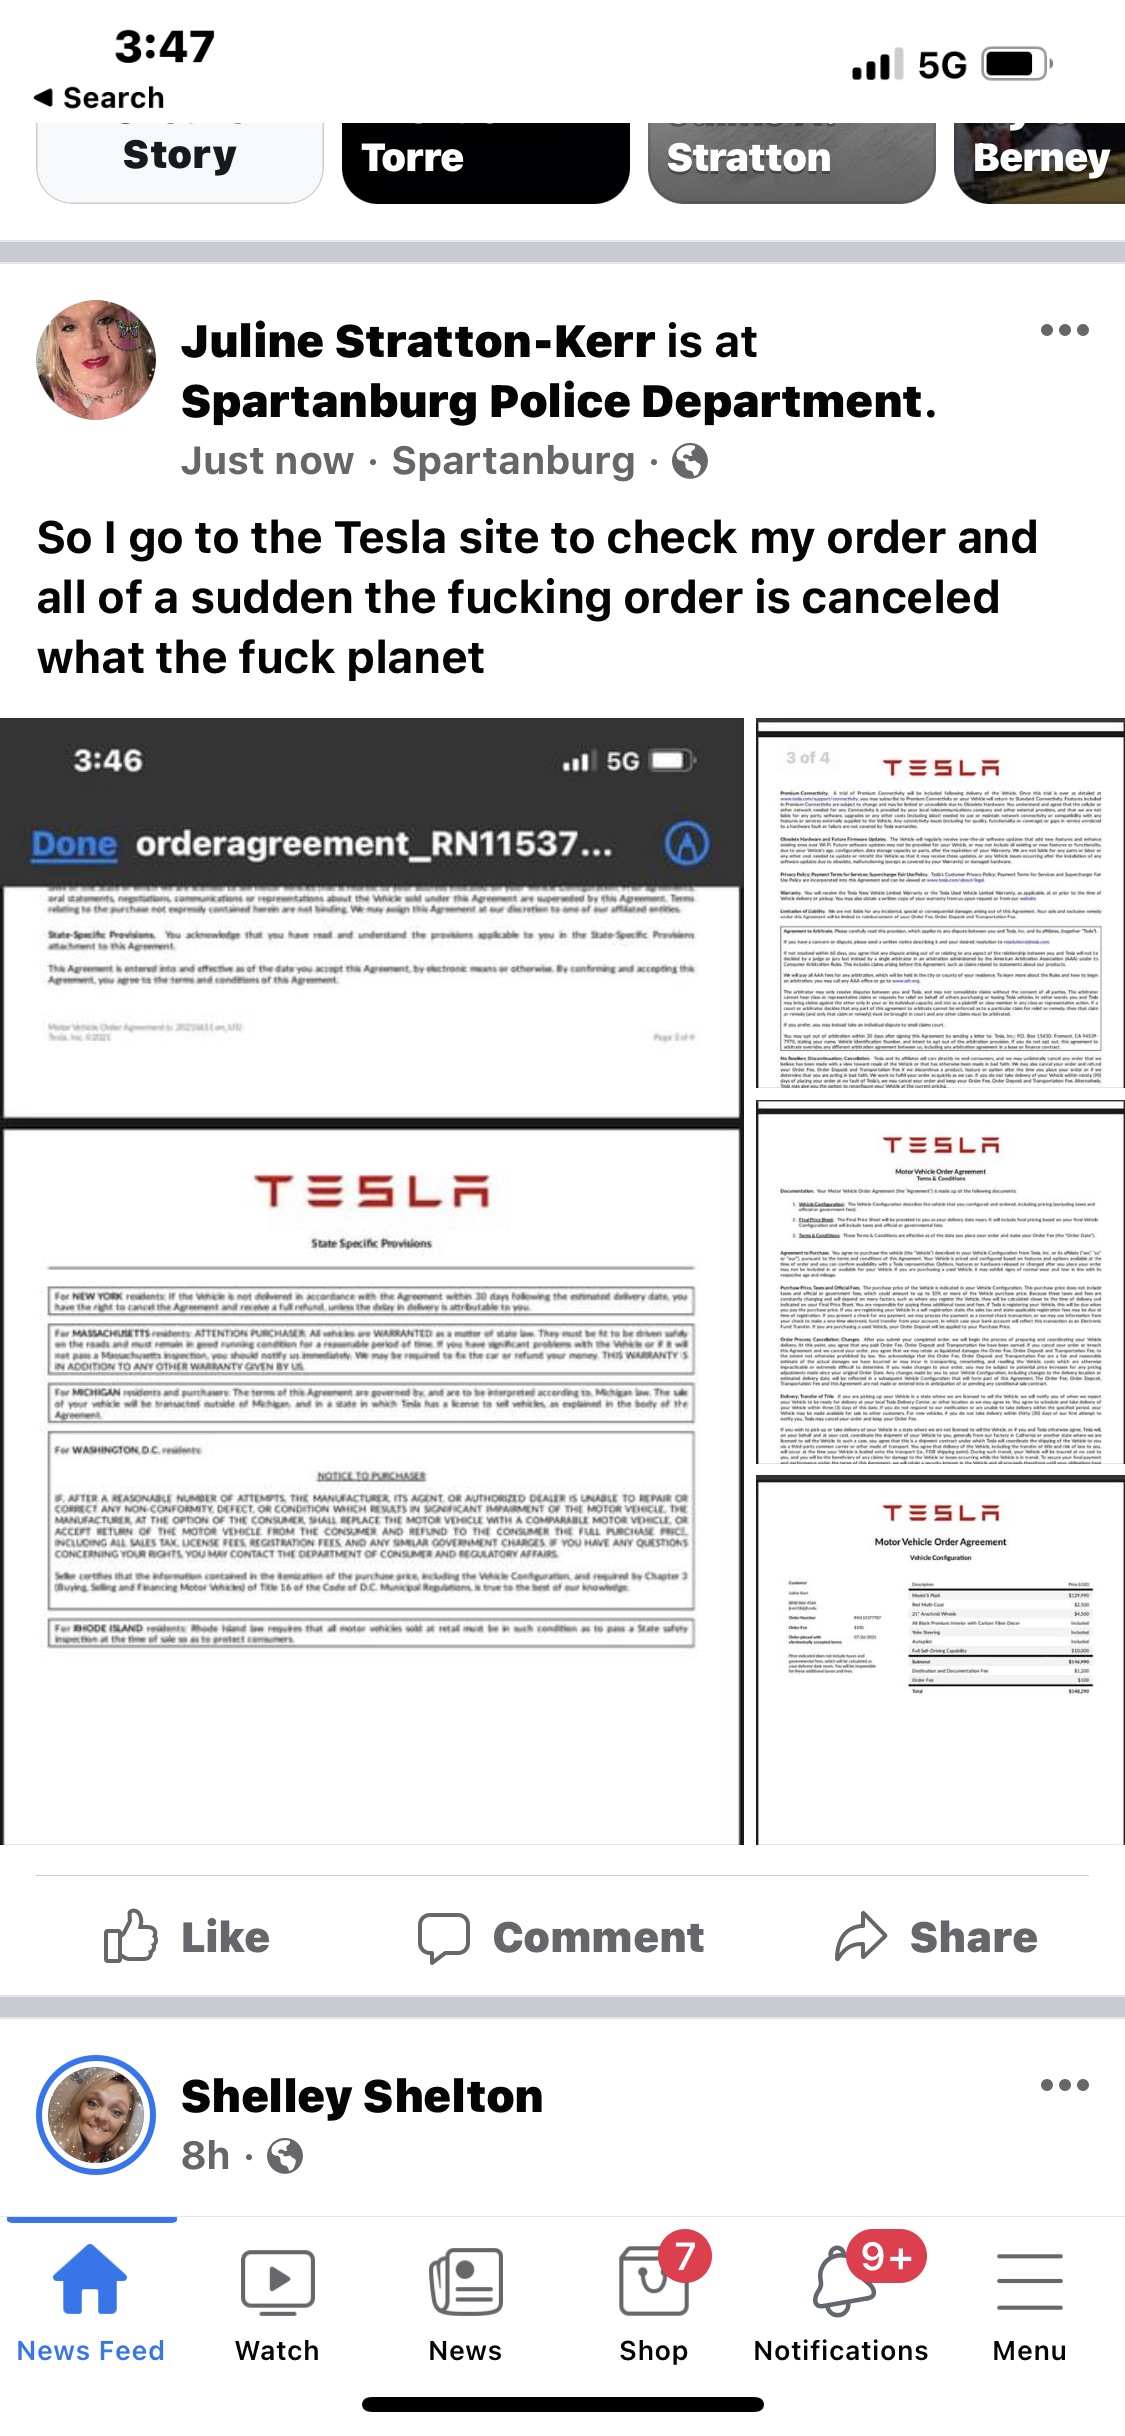 Tesla model S agreement, July 2021